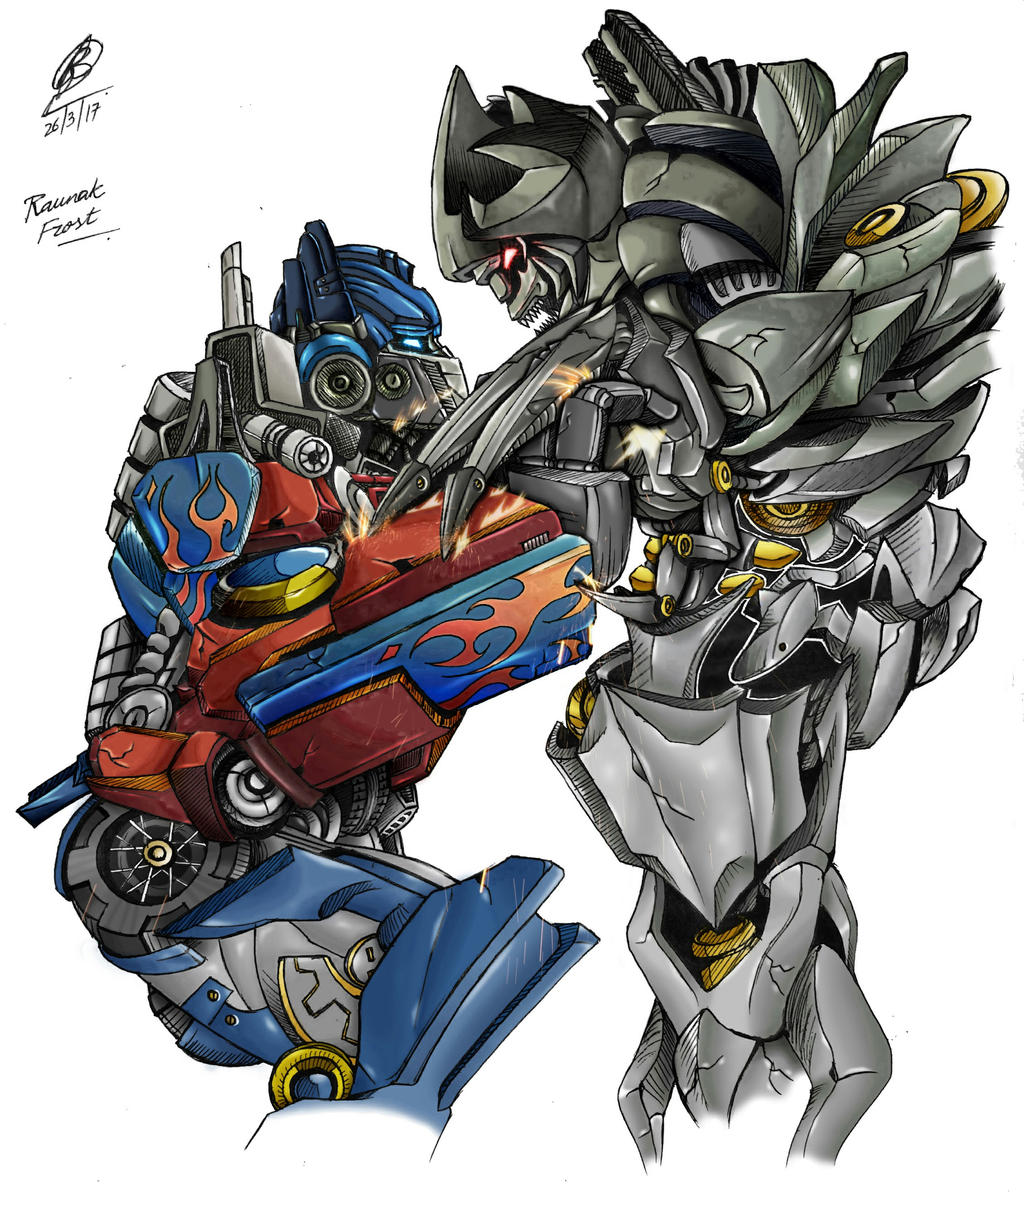 Transformers: Optimus Prime vs. Megatron